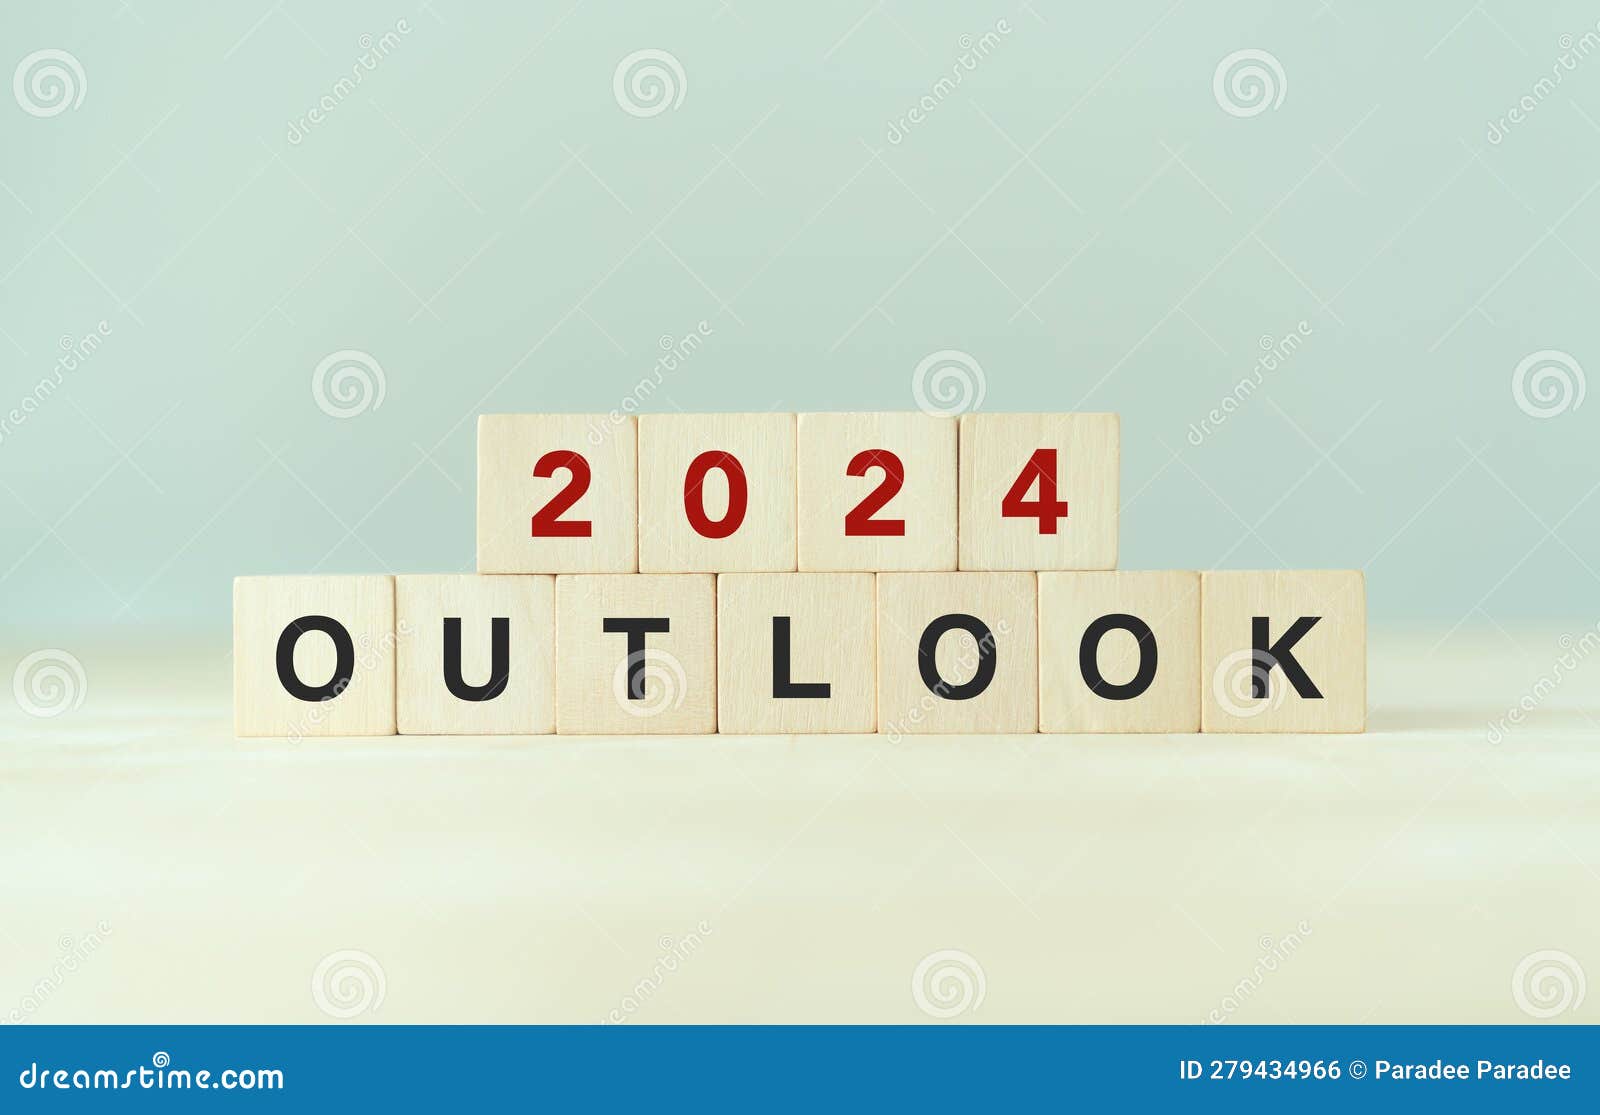 2024 Economic Outlook Concept. Stock Photo Image of success